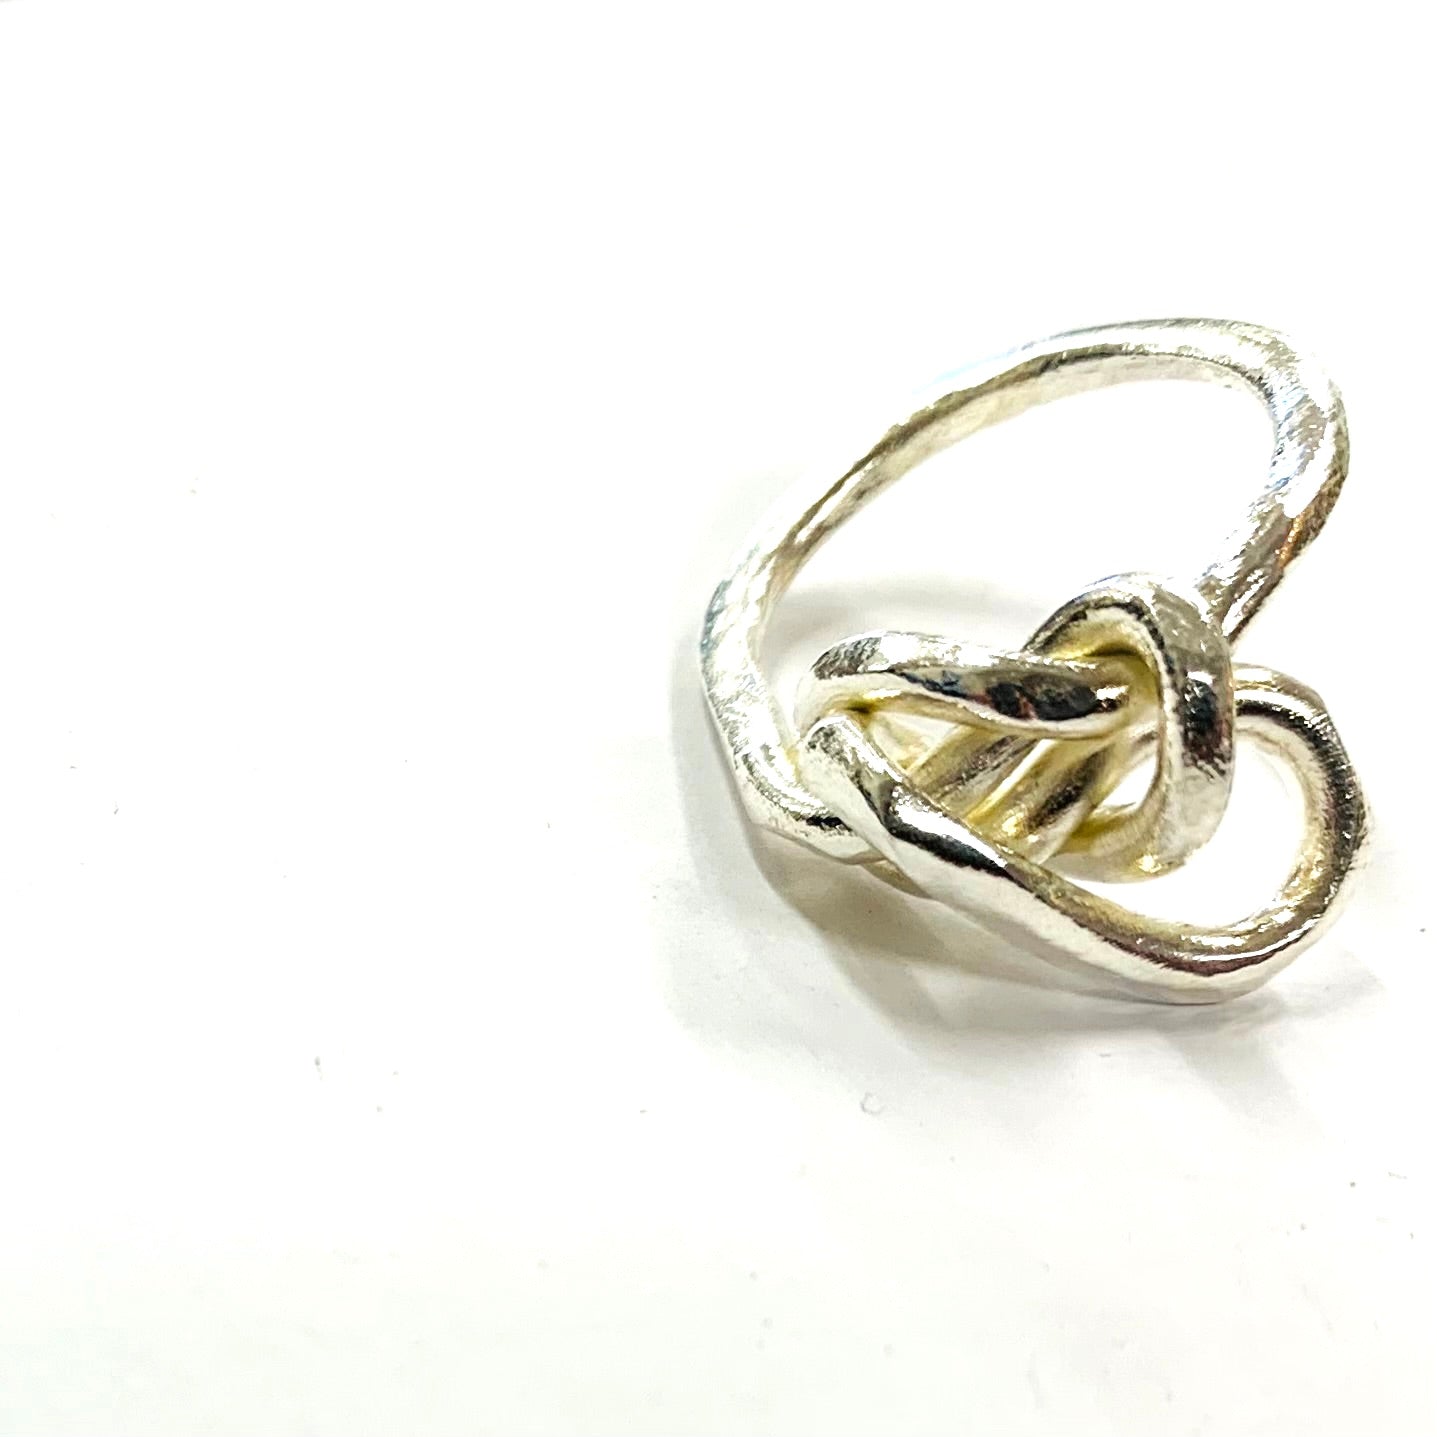 Intricate medium silver knot ring